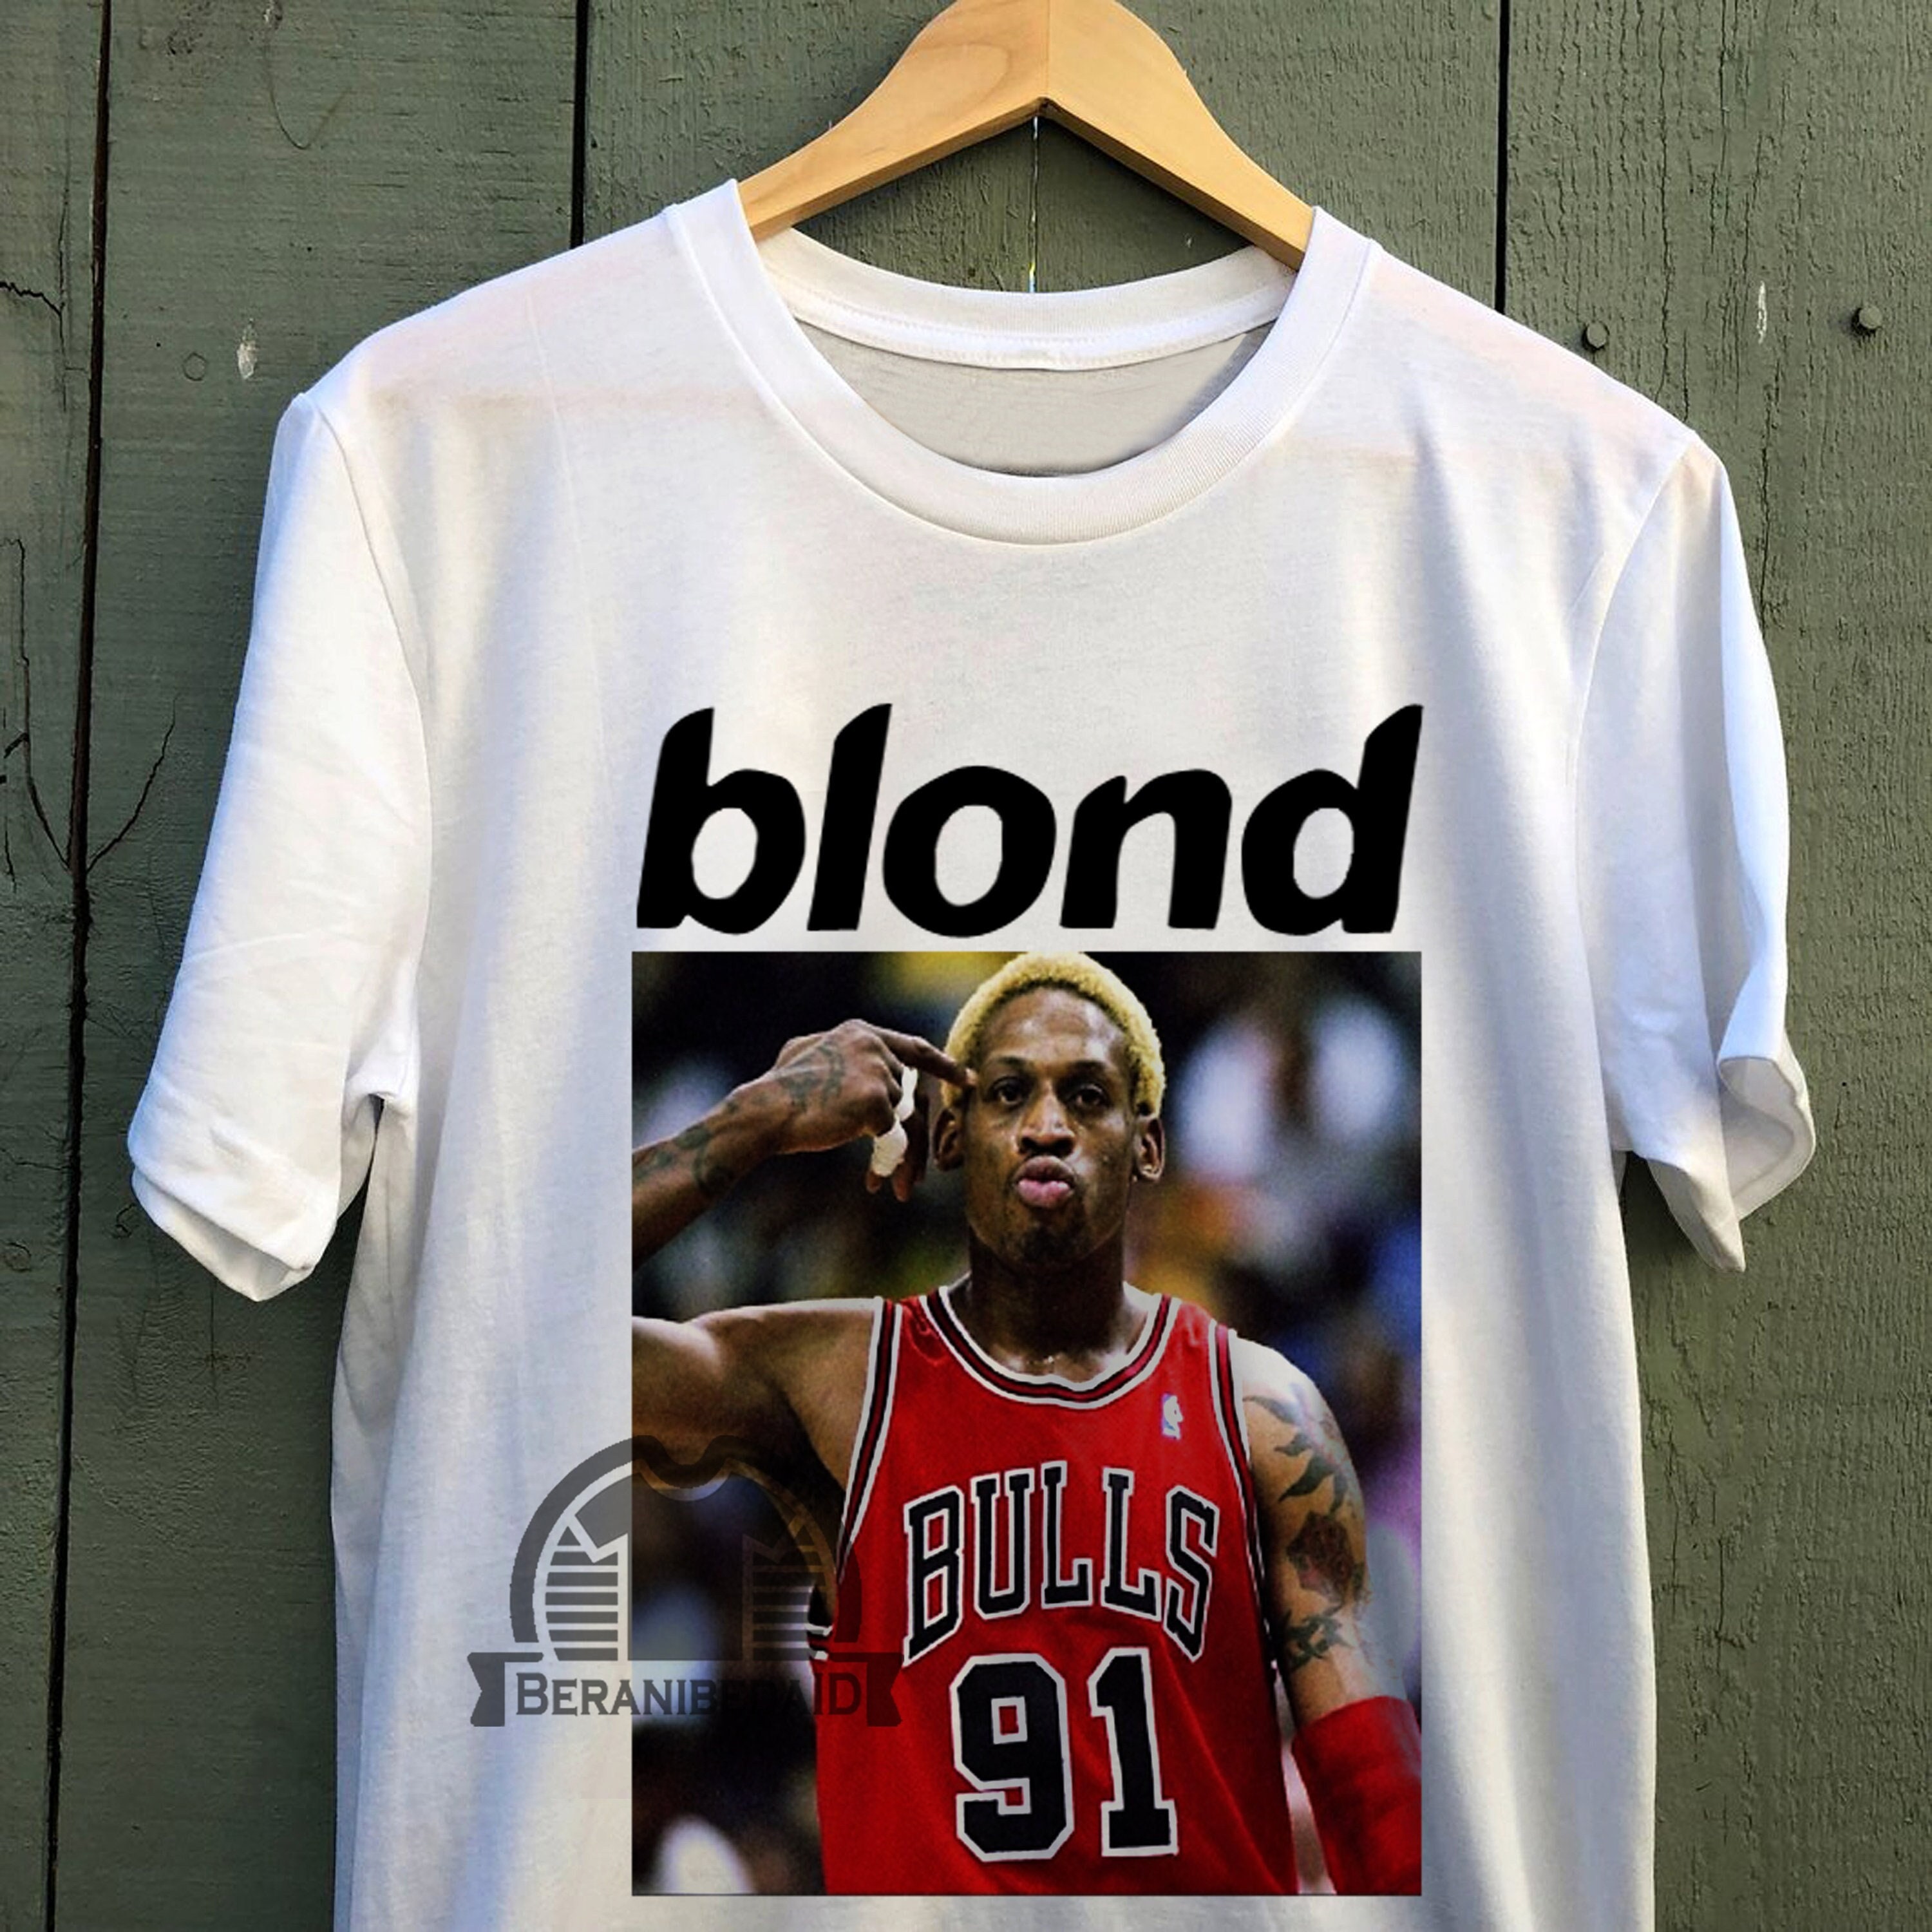 Dennis Rodman T-Shirt in Rose Tie Dye - Glue Store